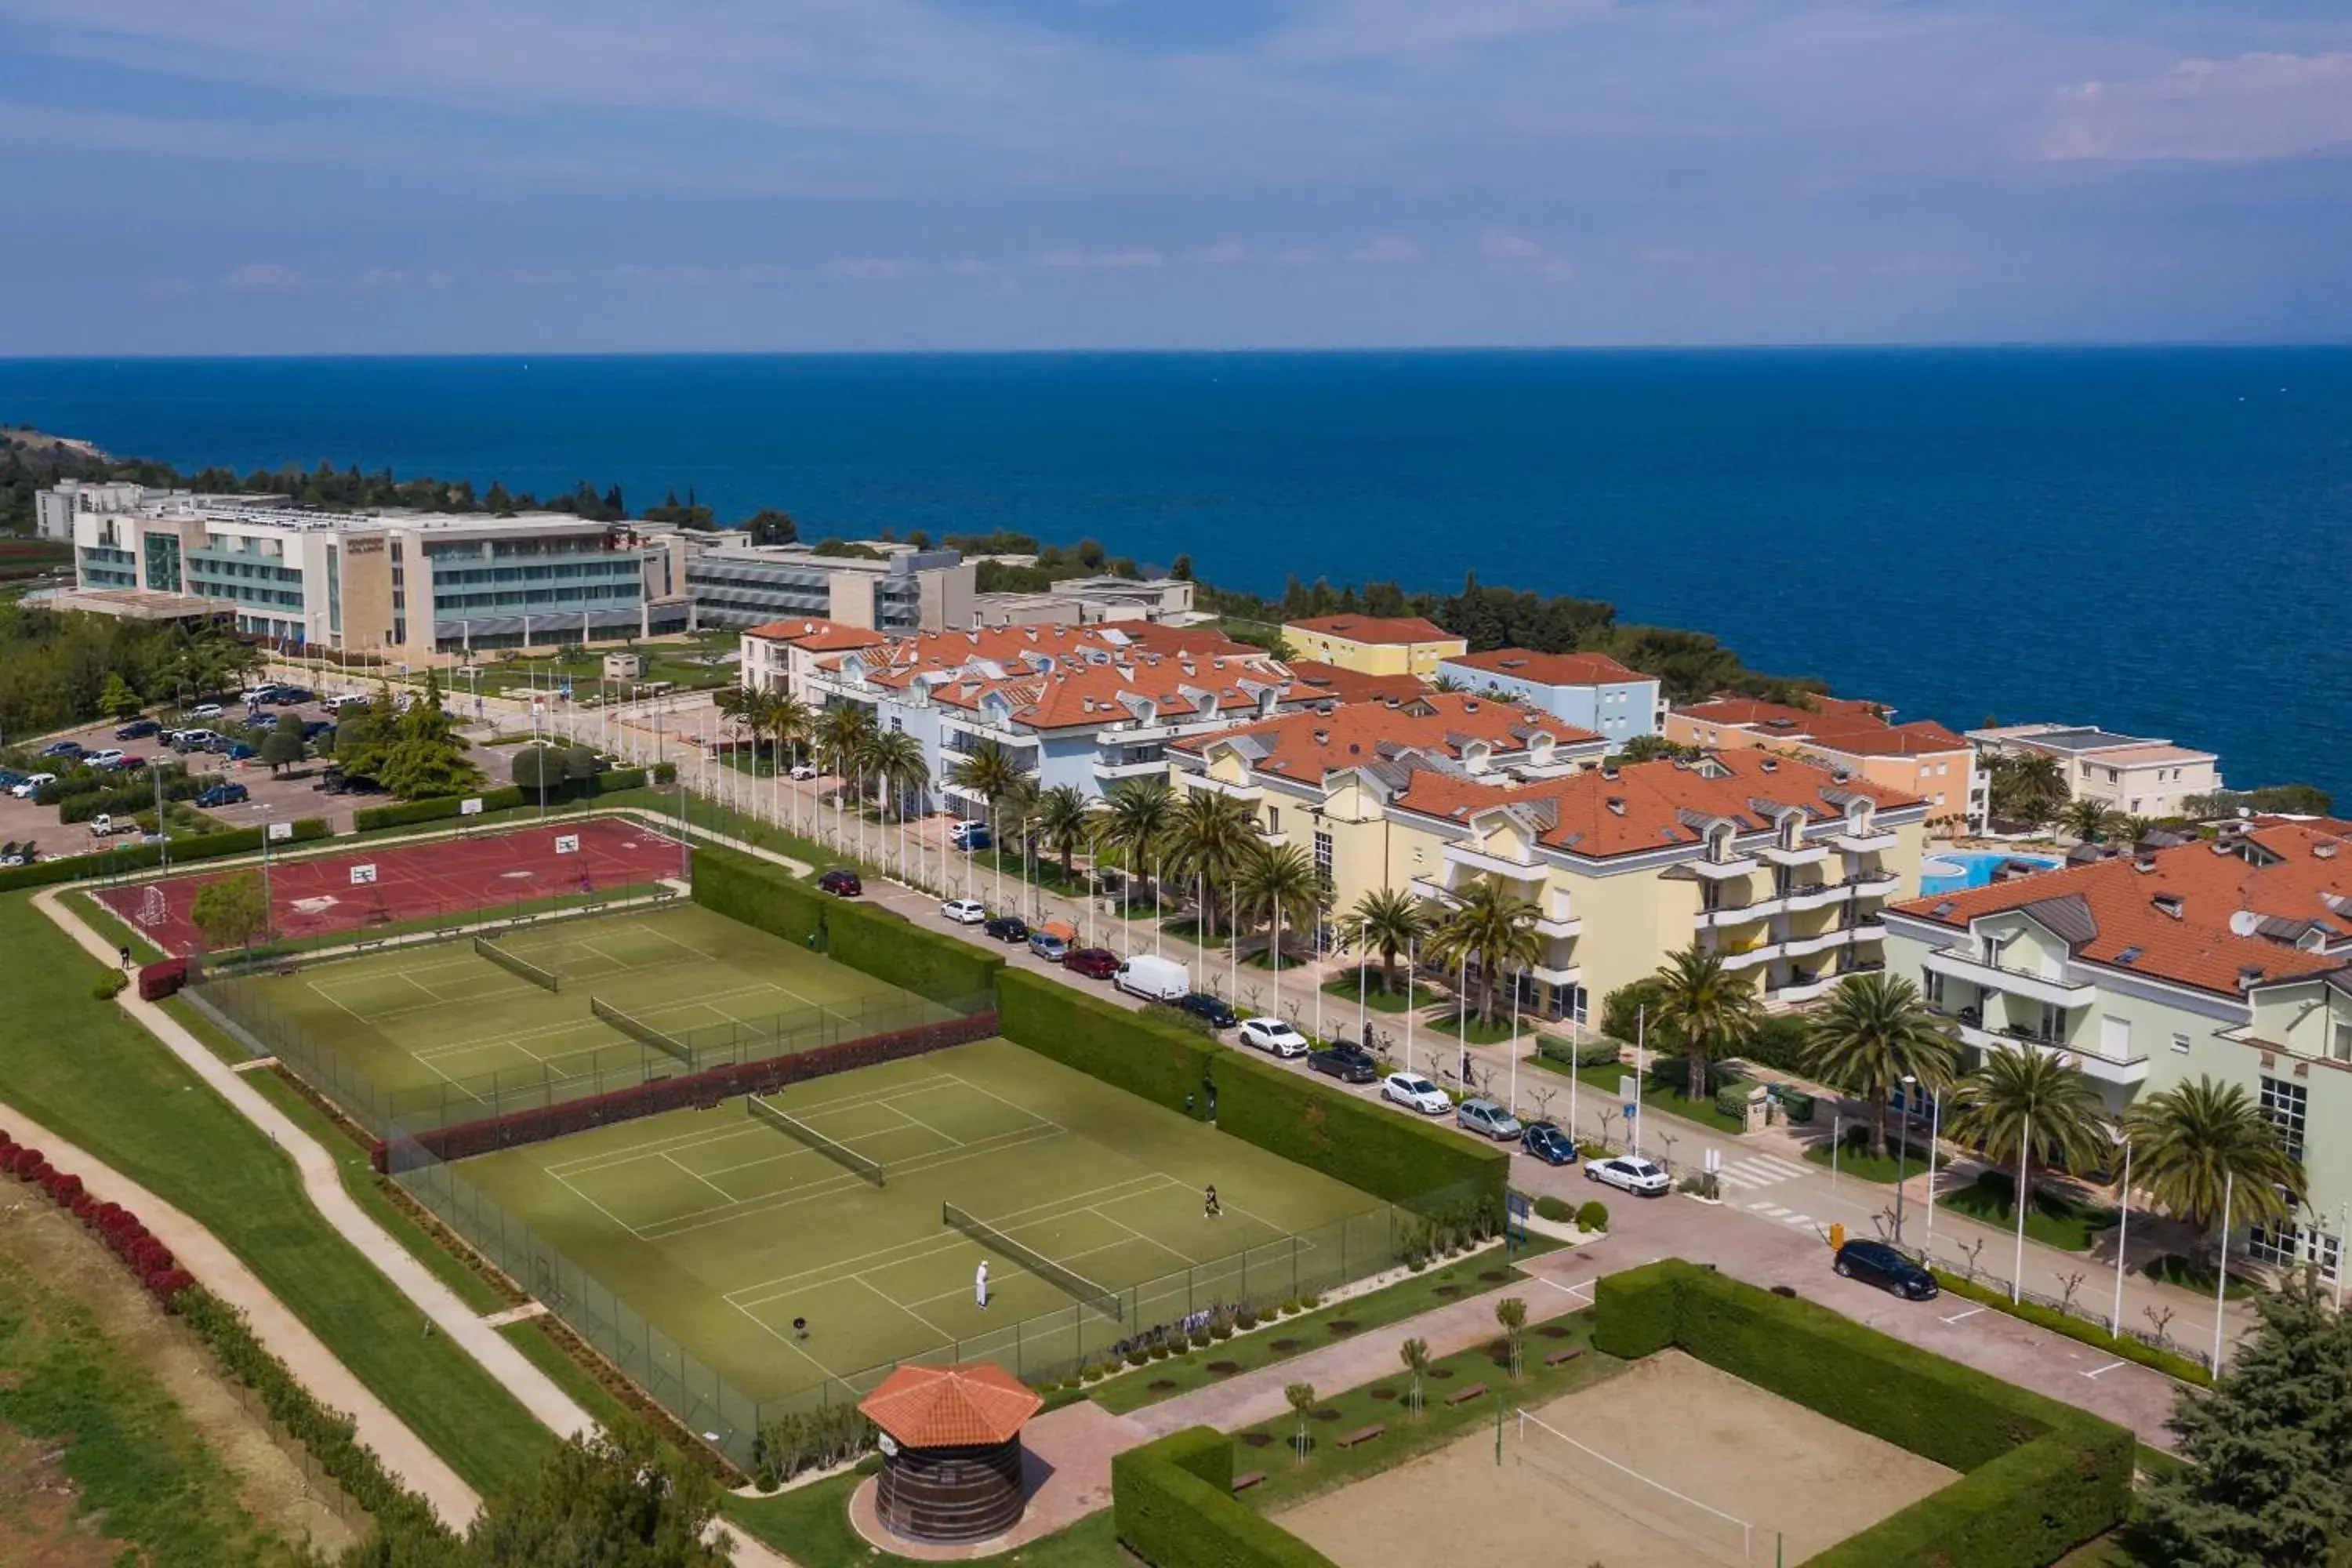 Tennis court, Bird's-eye View in Kempinski Hotel Adriatic Istria Croatia